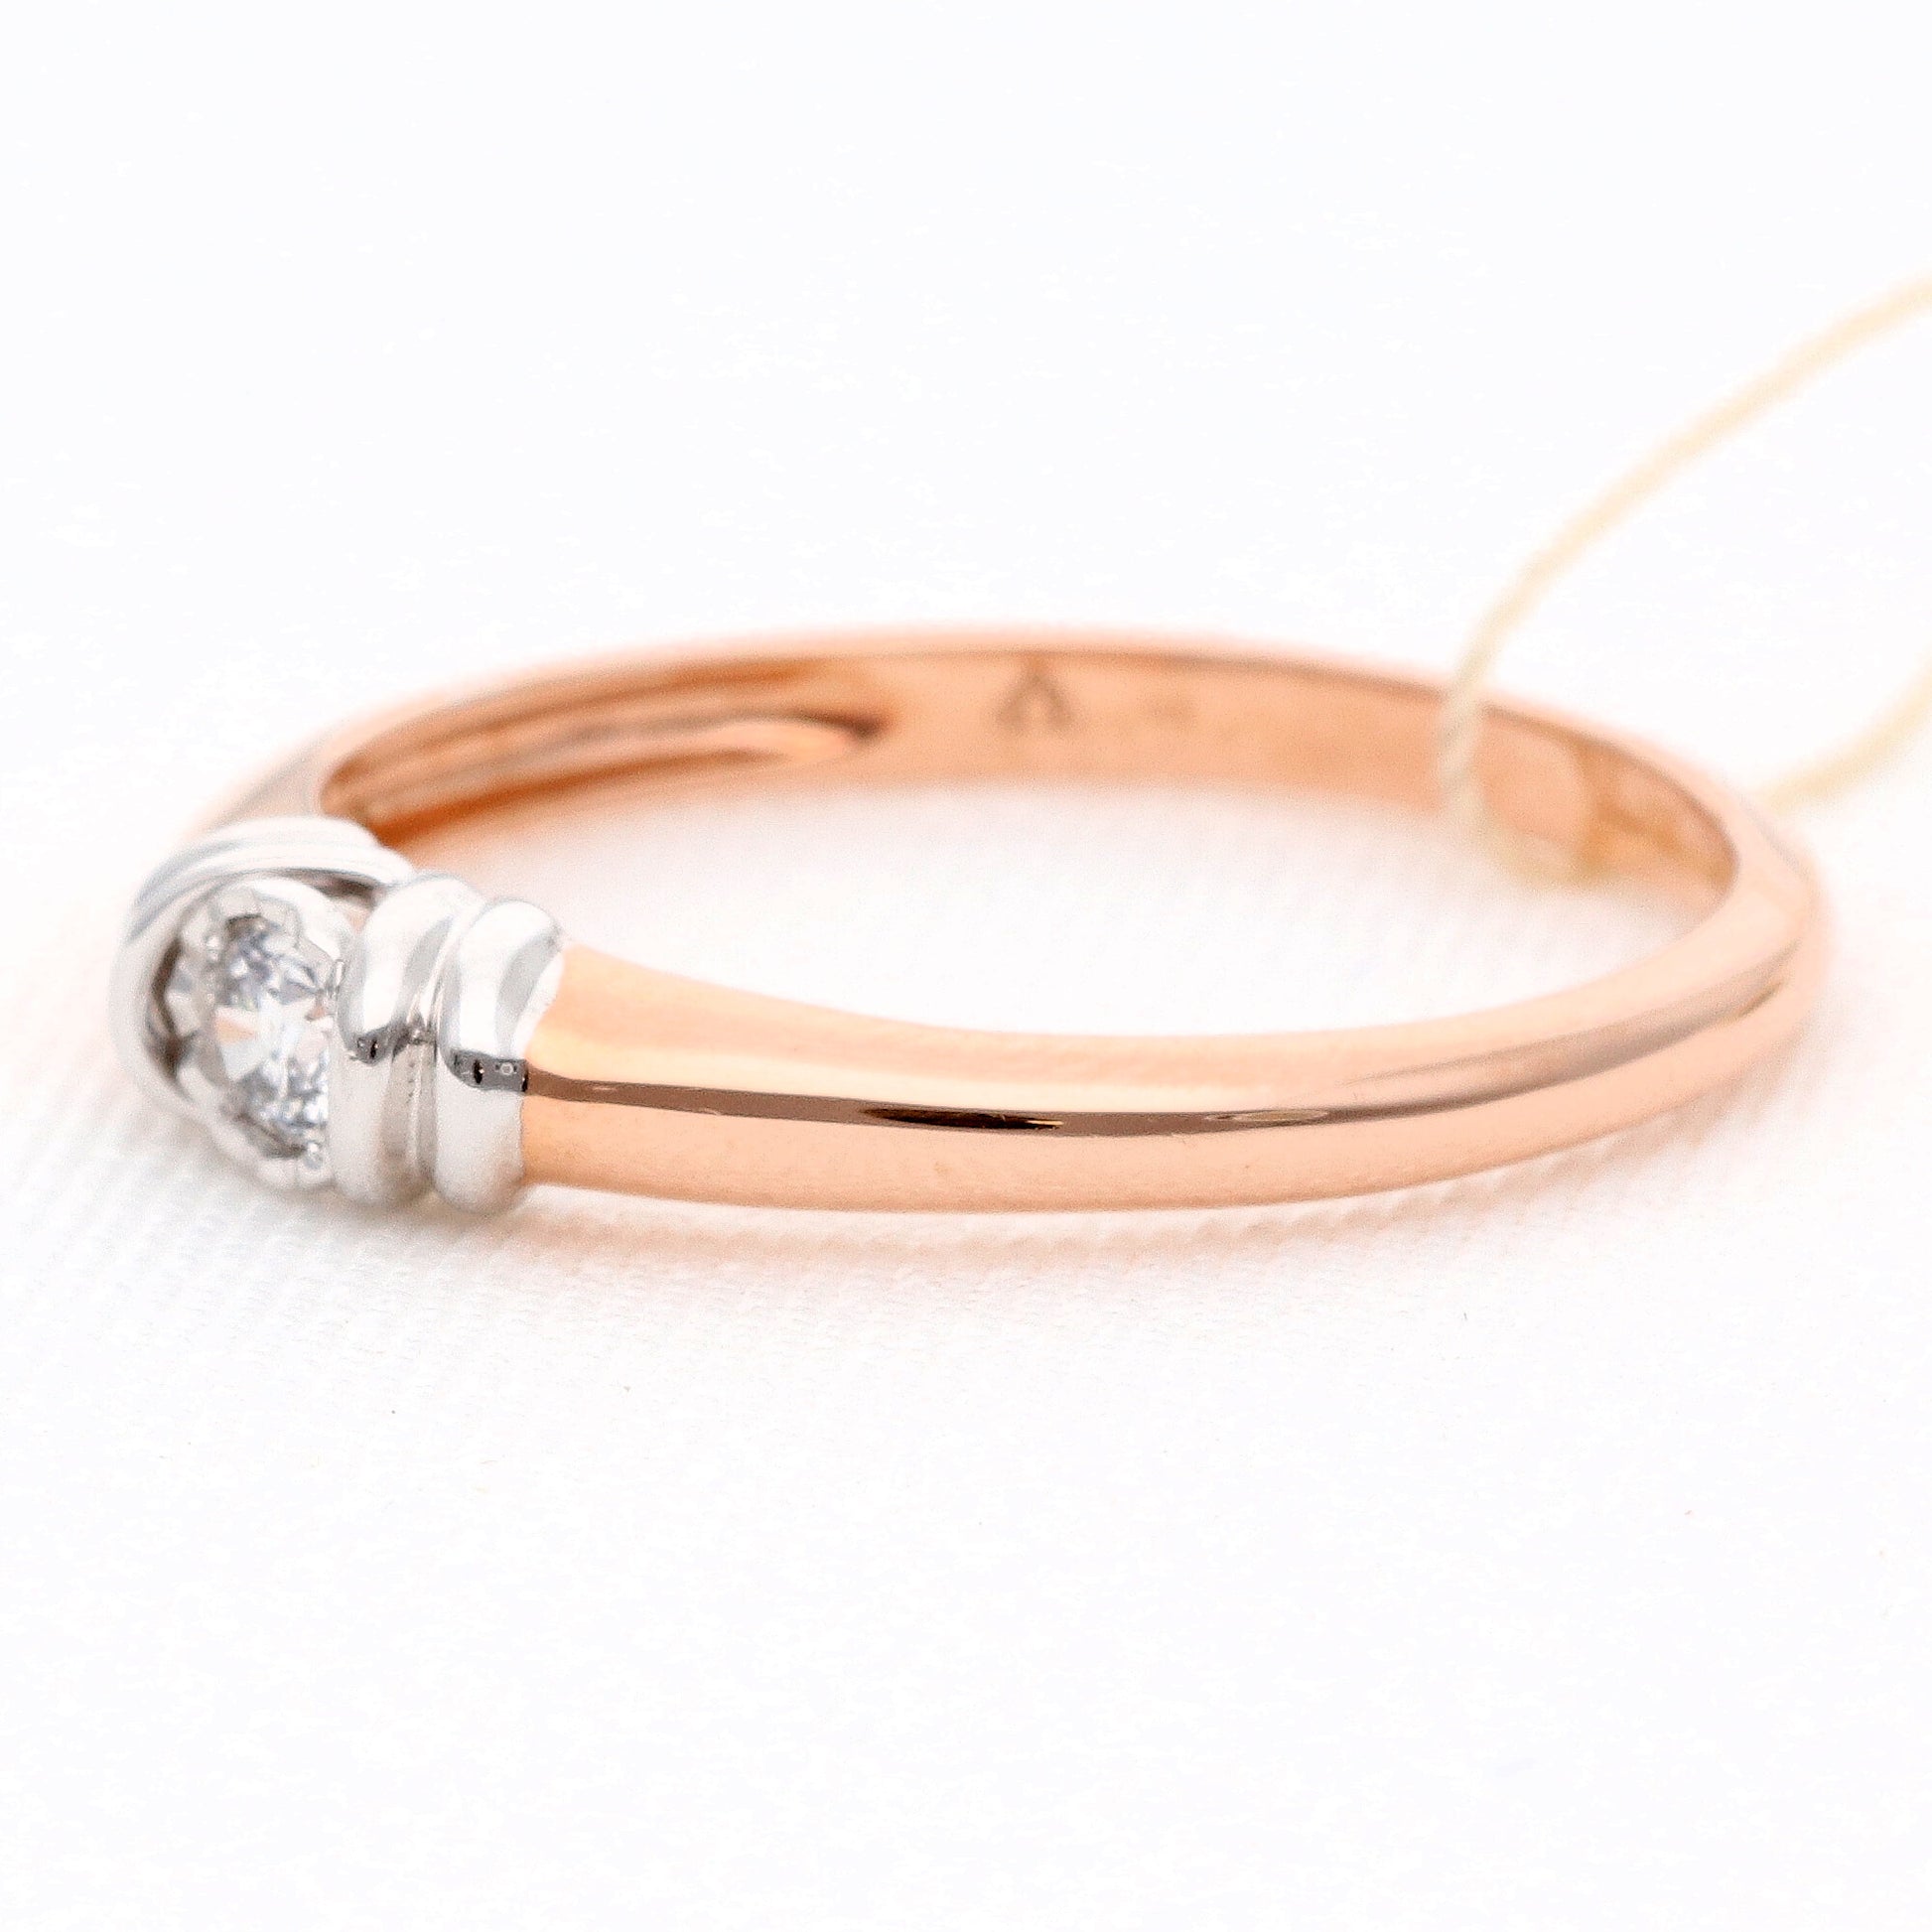 Auksinis žiedas su deimantu  0,08ct vestuviniaiziedai.lt